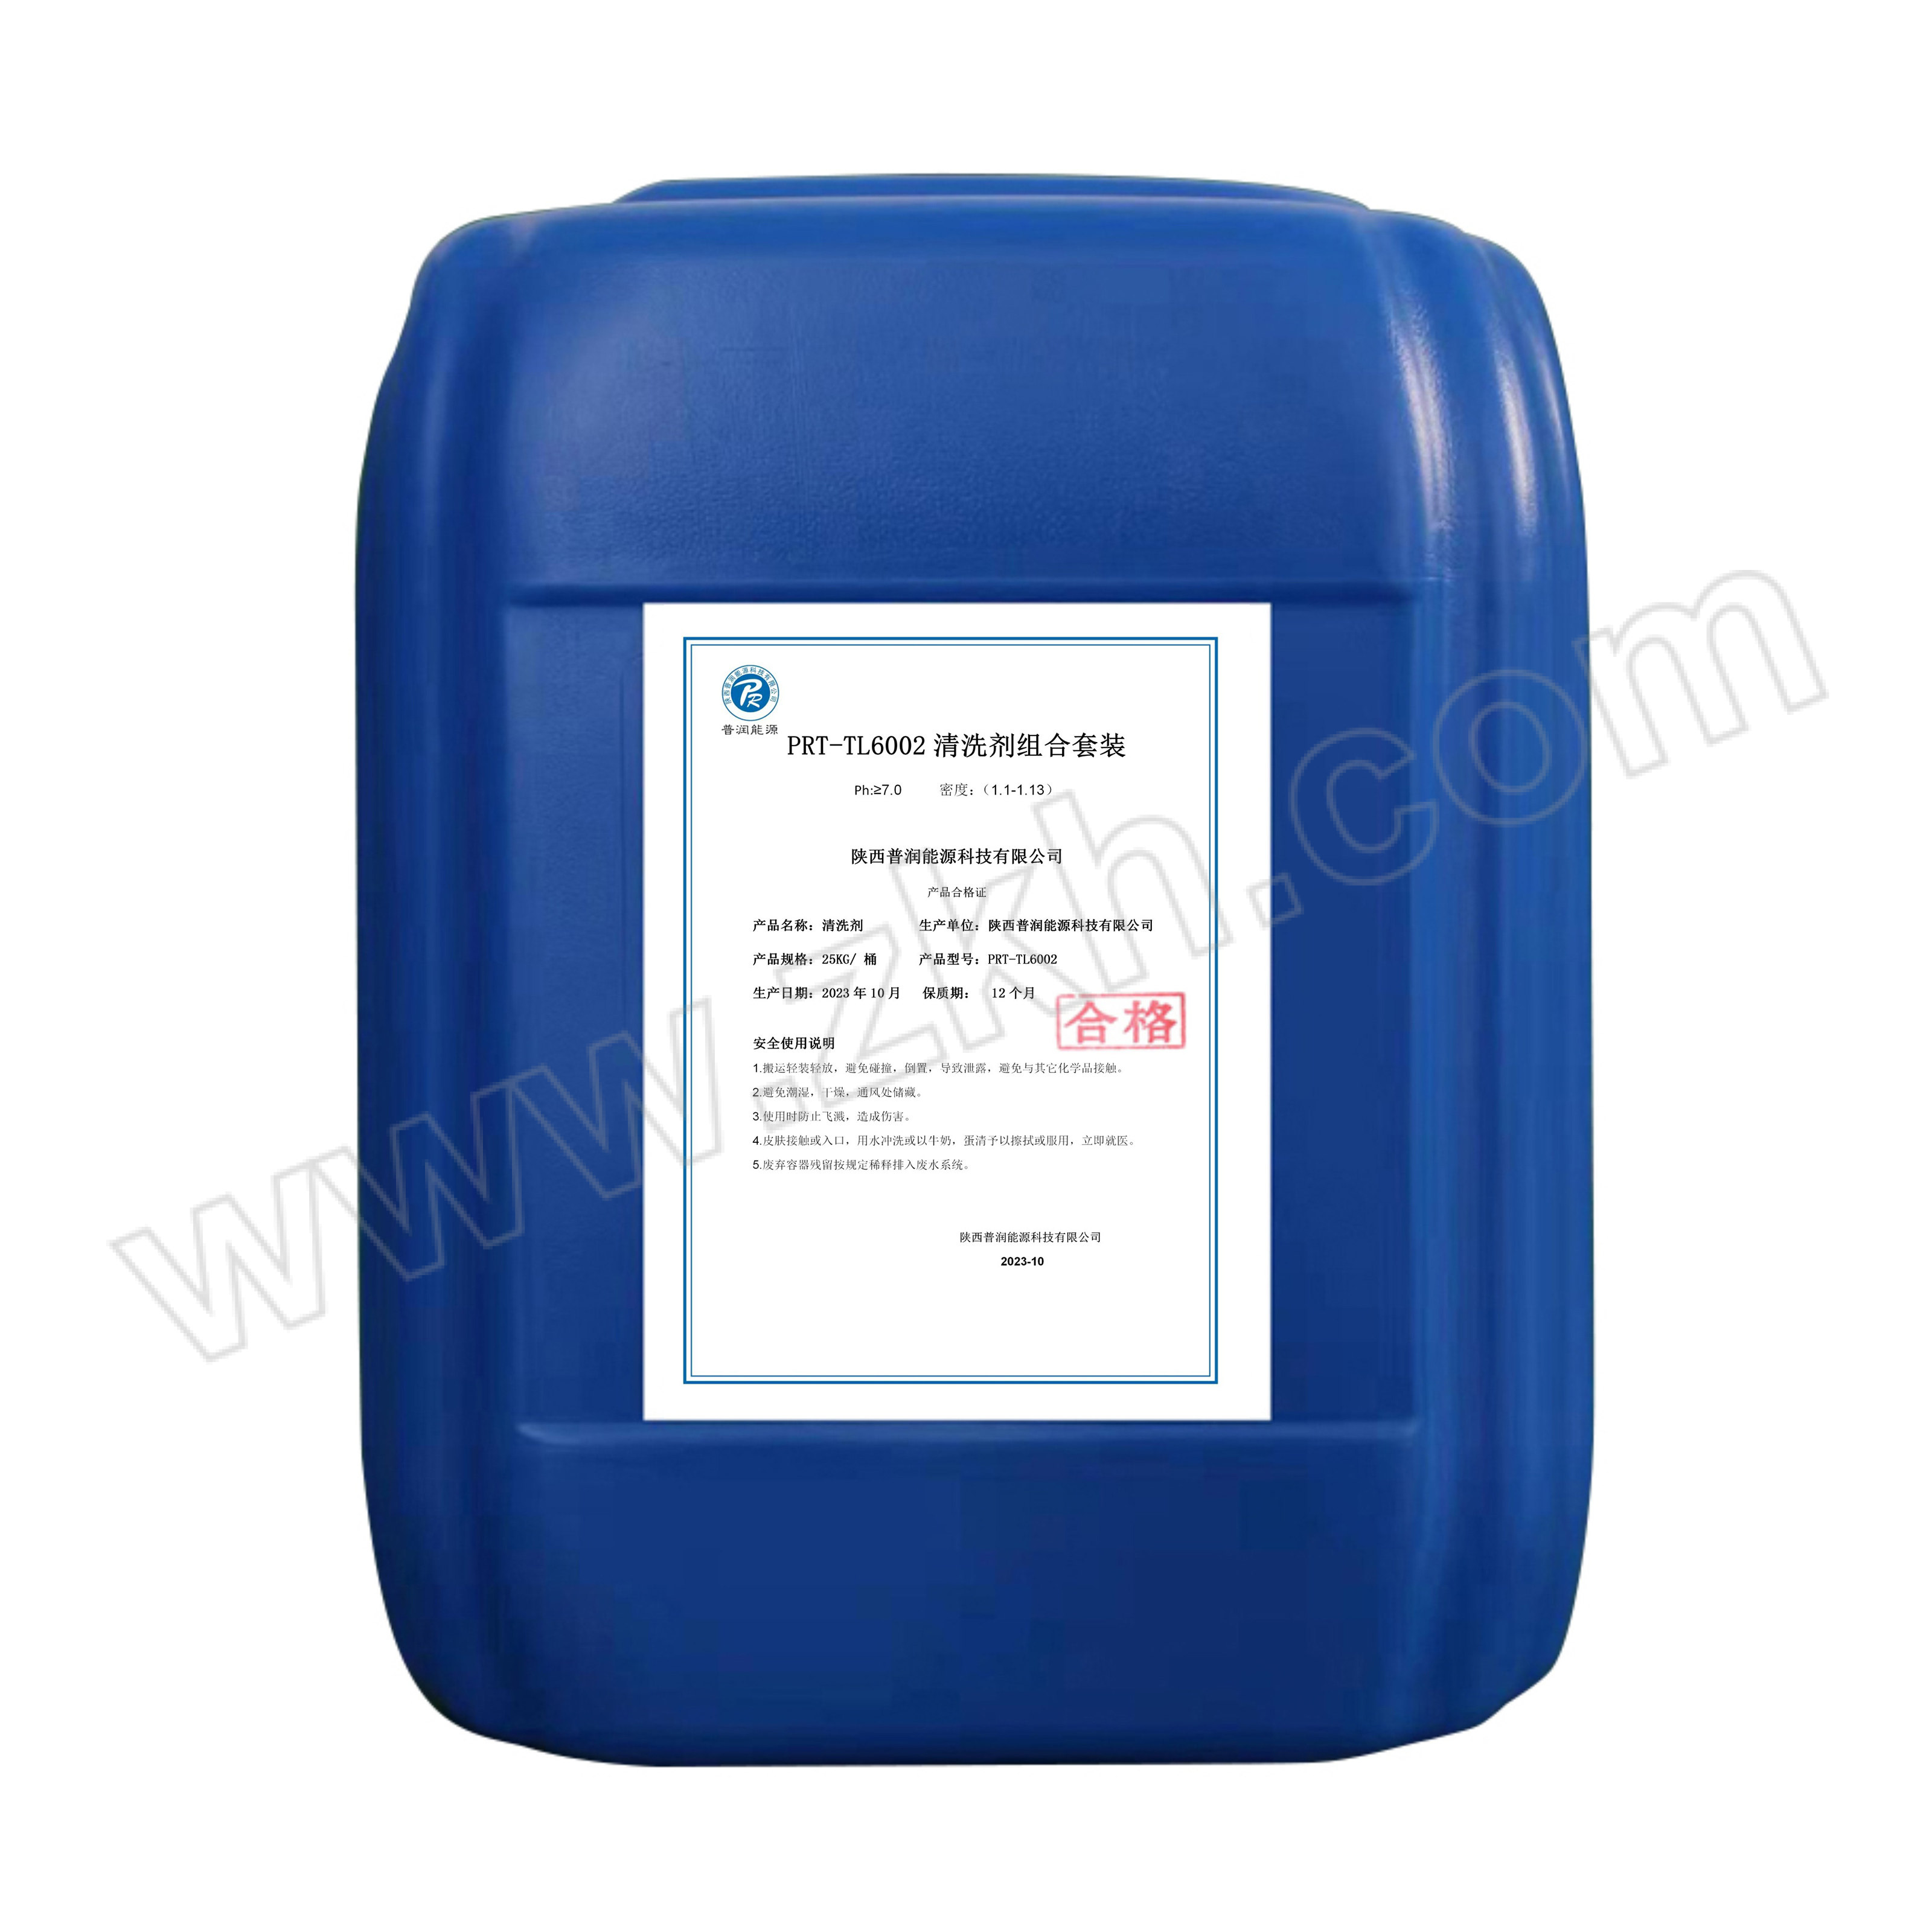 PRNY-PRT 清洗剂组合套装 PRT-TL6002 清洗剂(固体)×1袋(10kg)+消泡剂×5桶+脱硫增效剂×5桶 1套